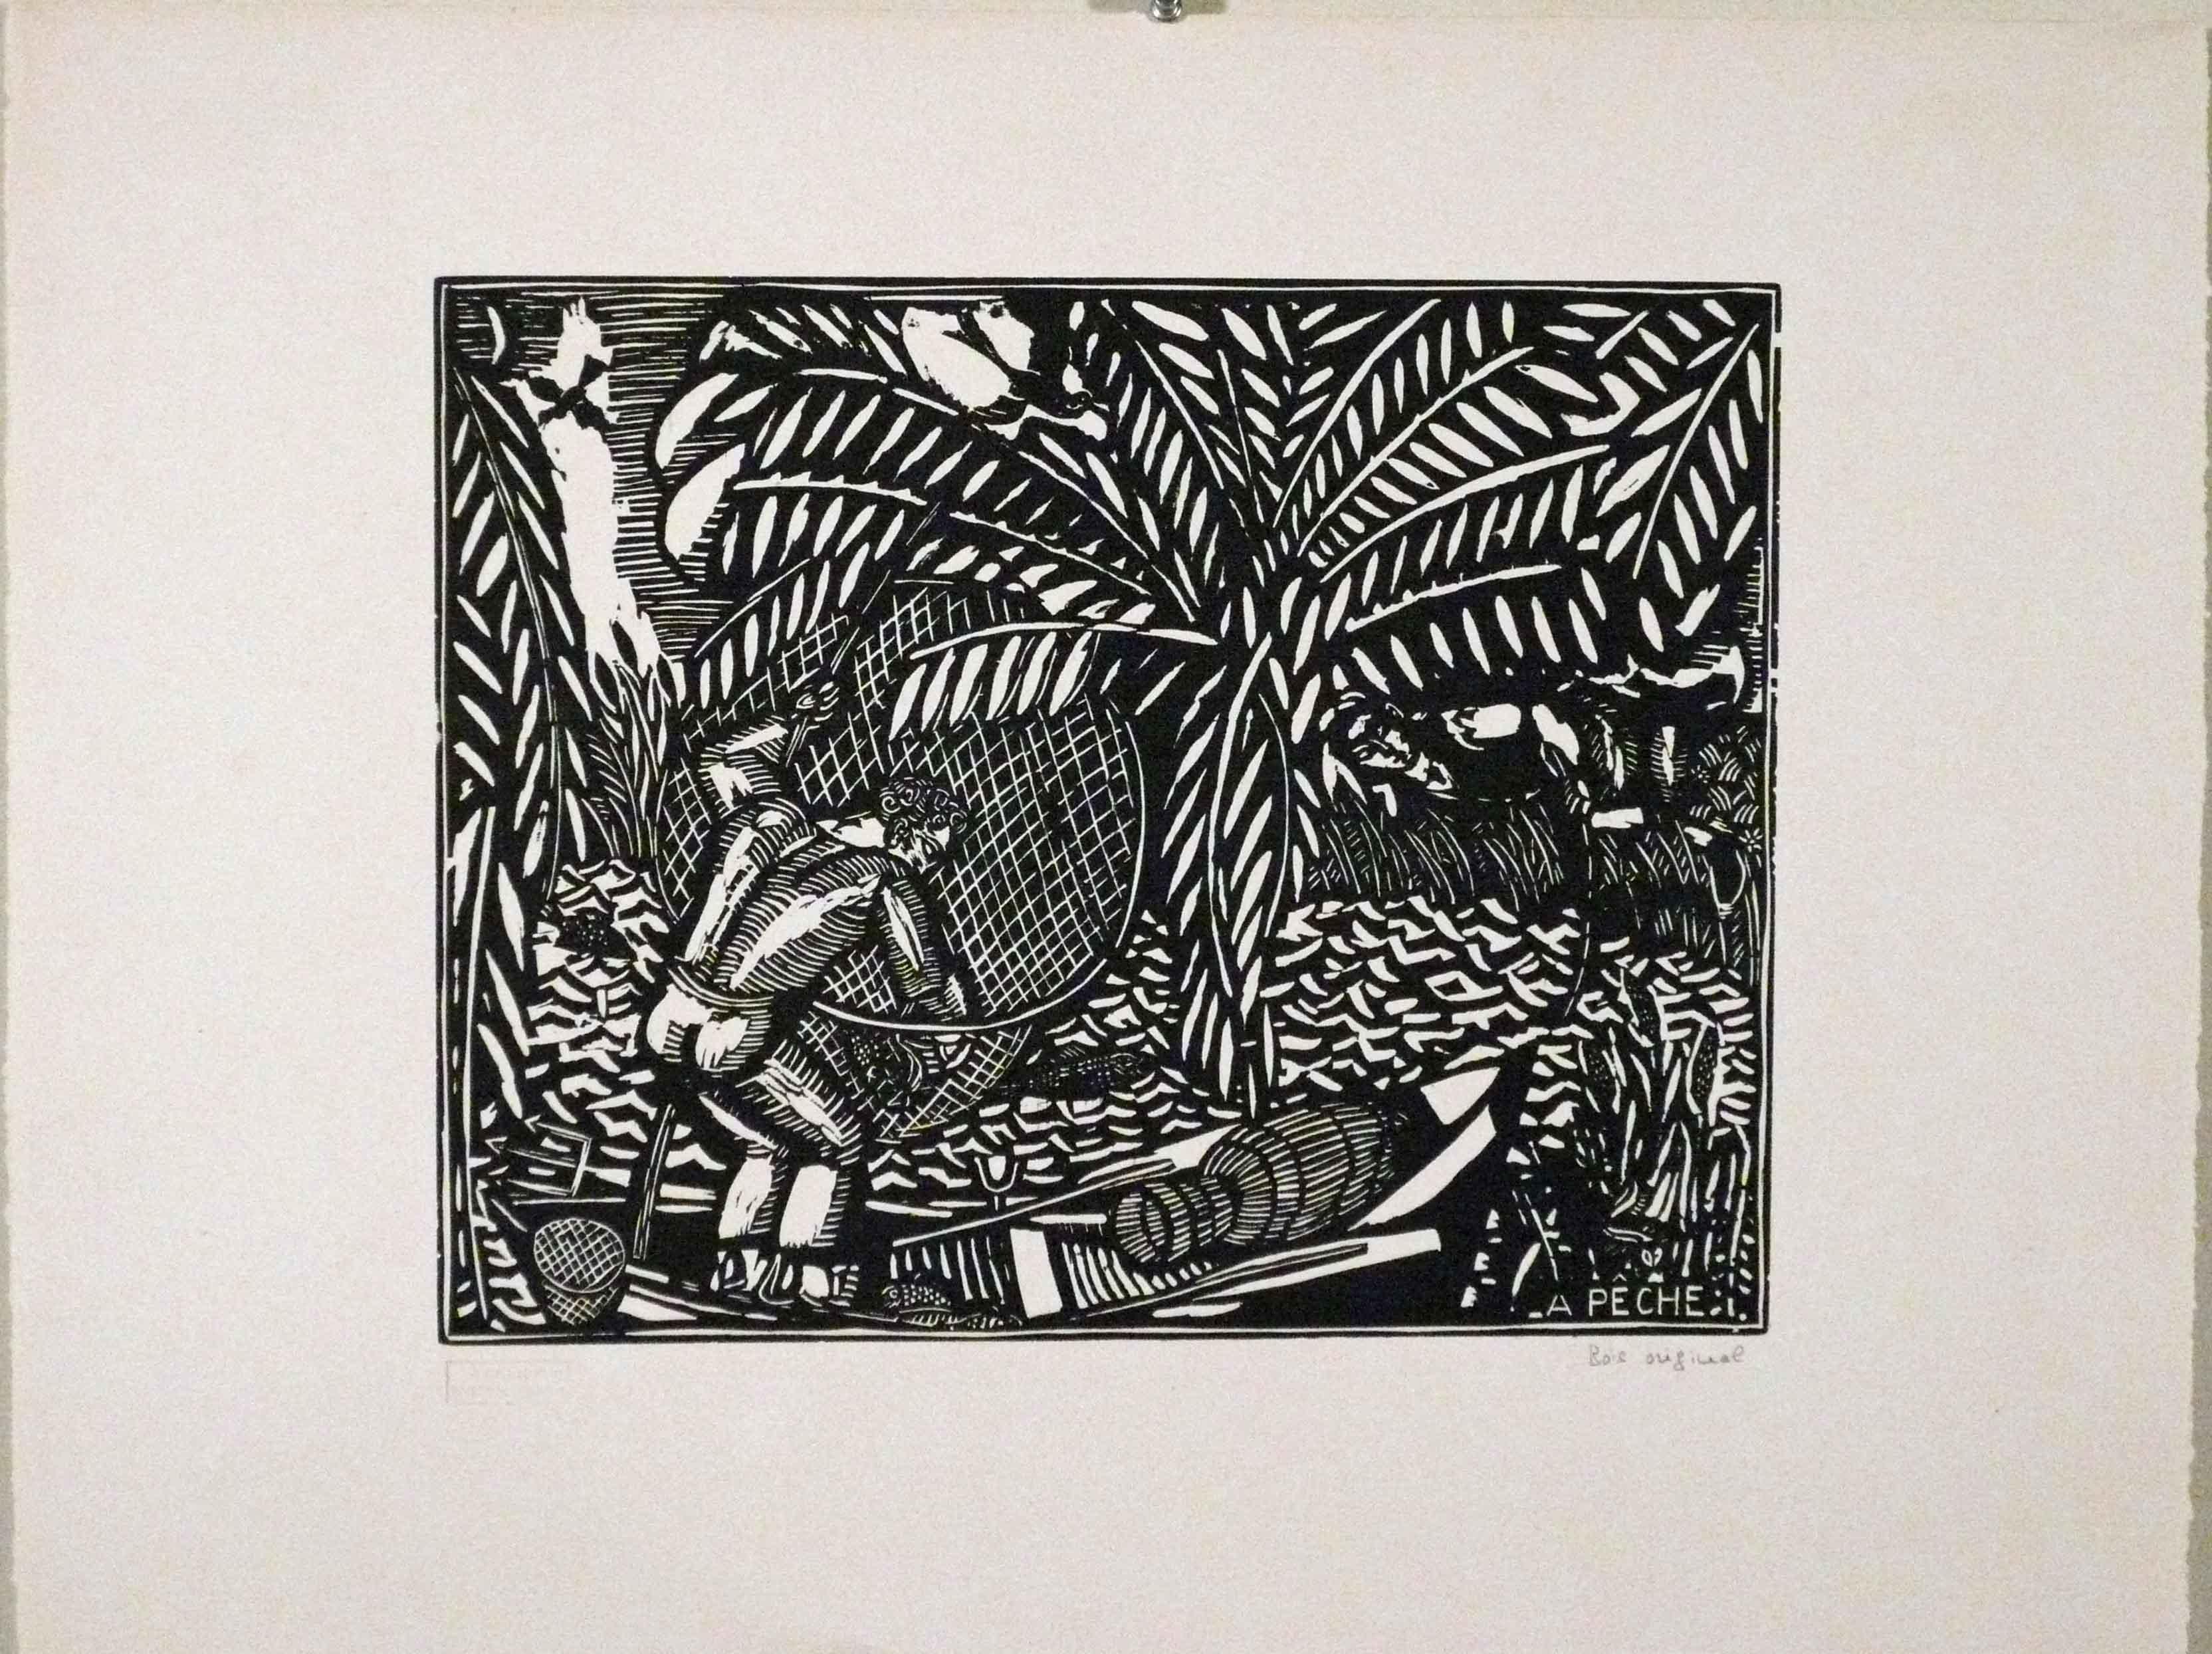 LA PECHE (FISHING) - Print by Raoul Dufy